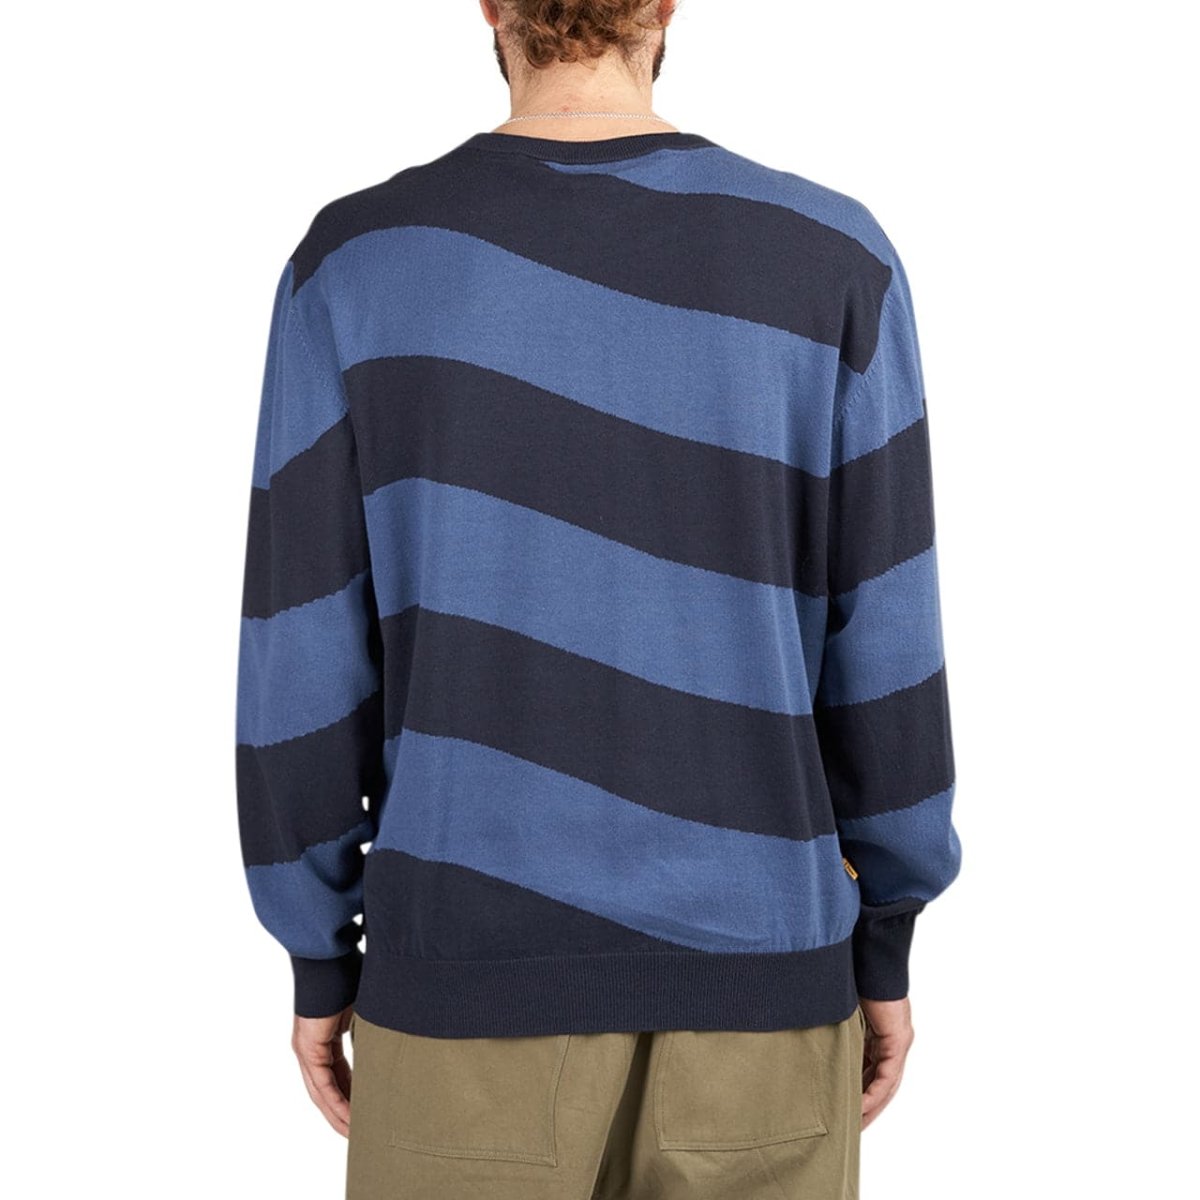 Dime Wave Striped Light Knit Sweater (Navy)  - Allike Store